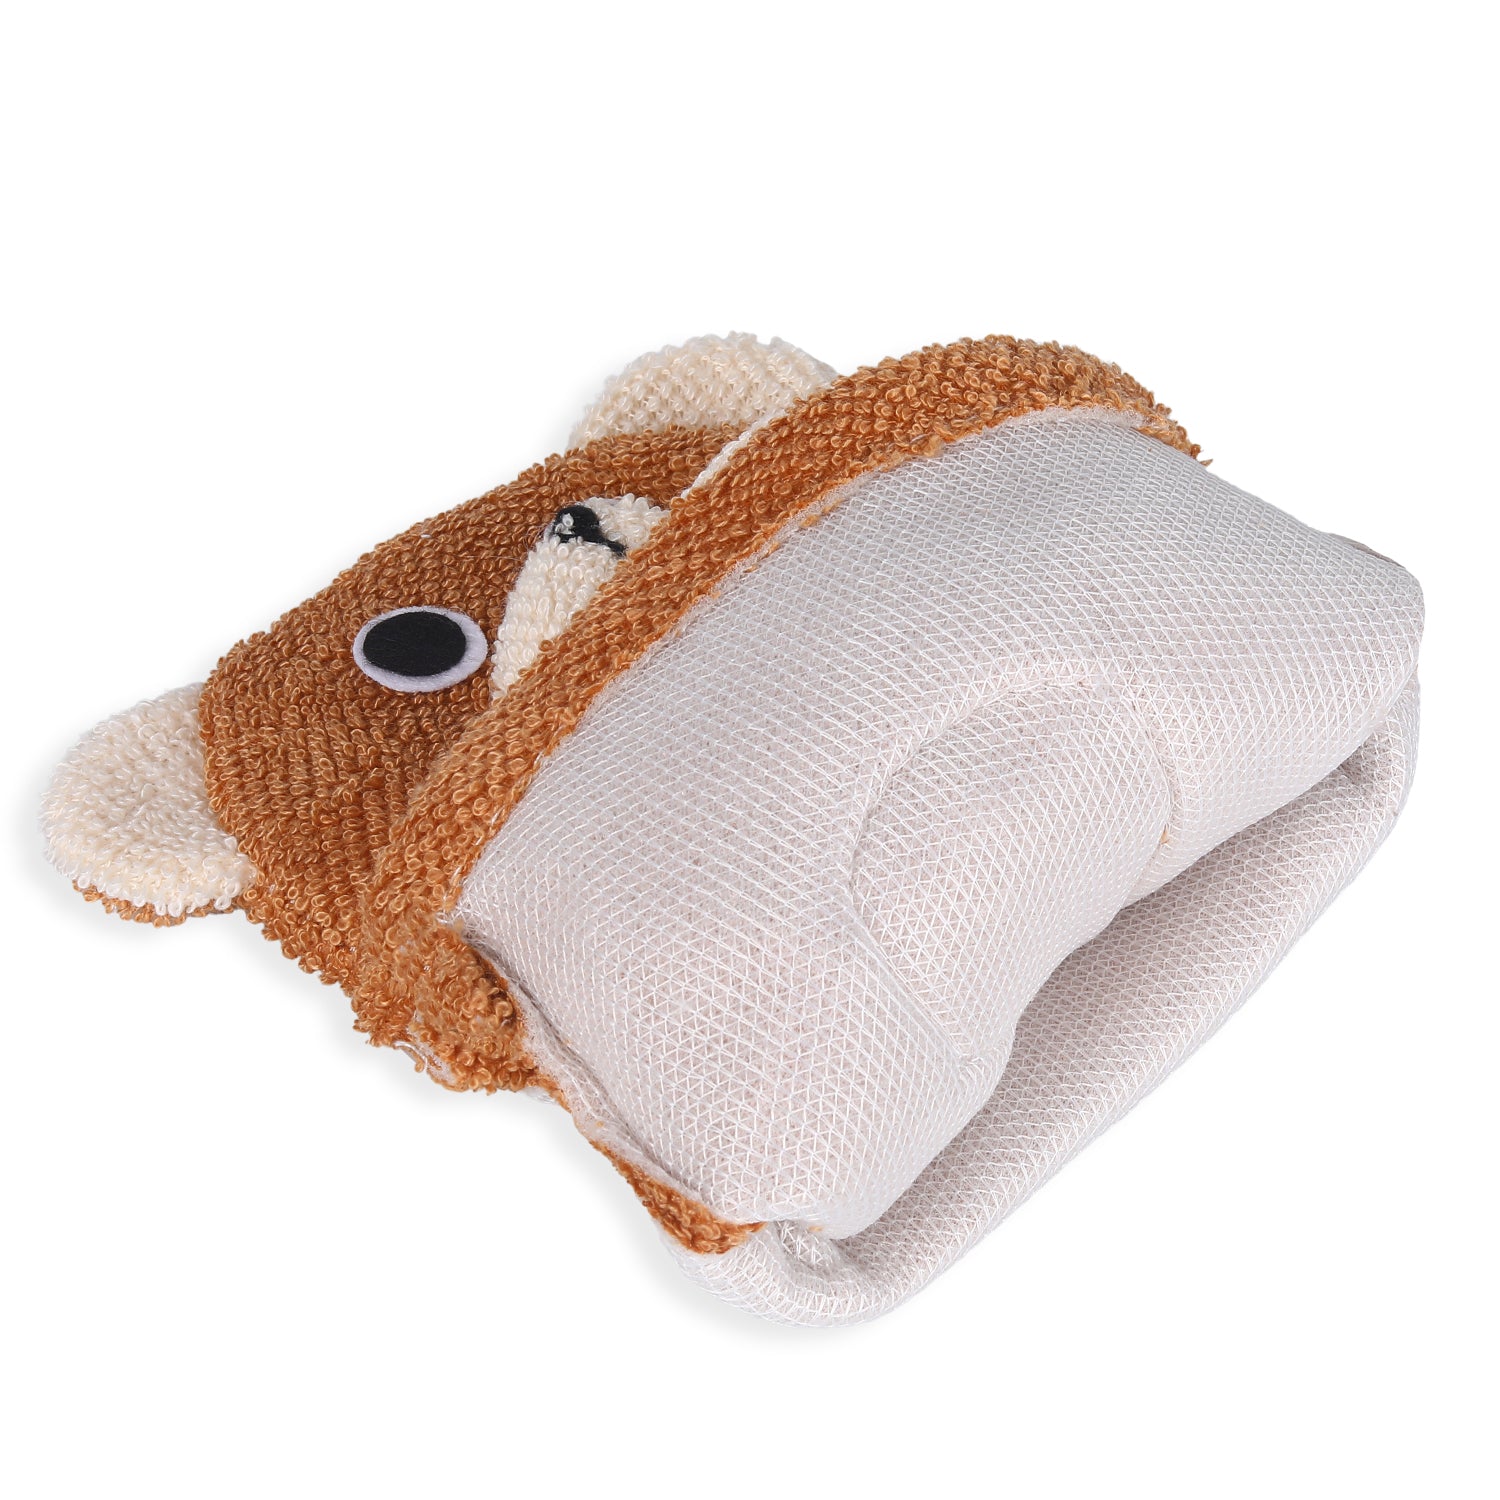 Baby Moo BFF Bear Bath Time Fun Hand Puppet Loofah Bath Glove - Brown - Baby Moo